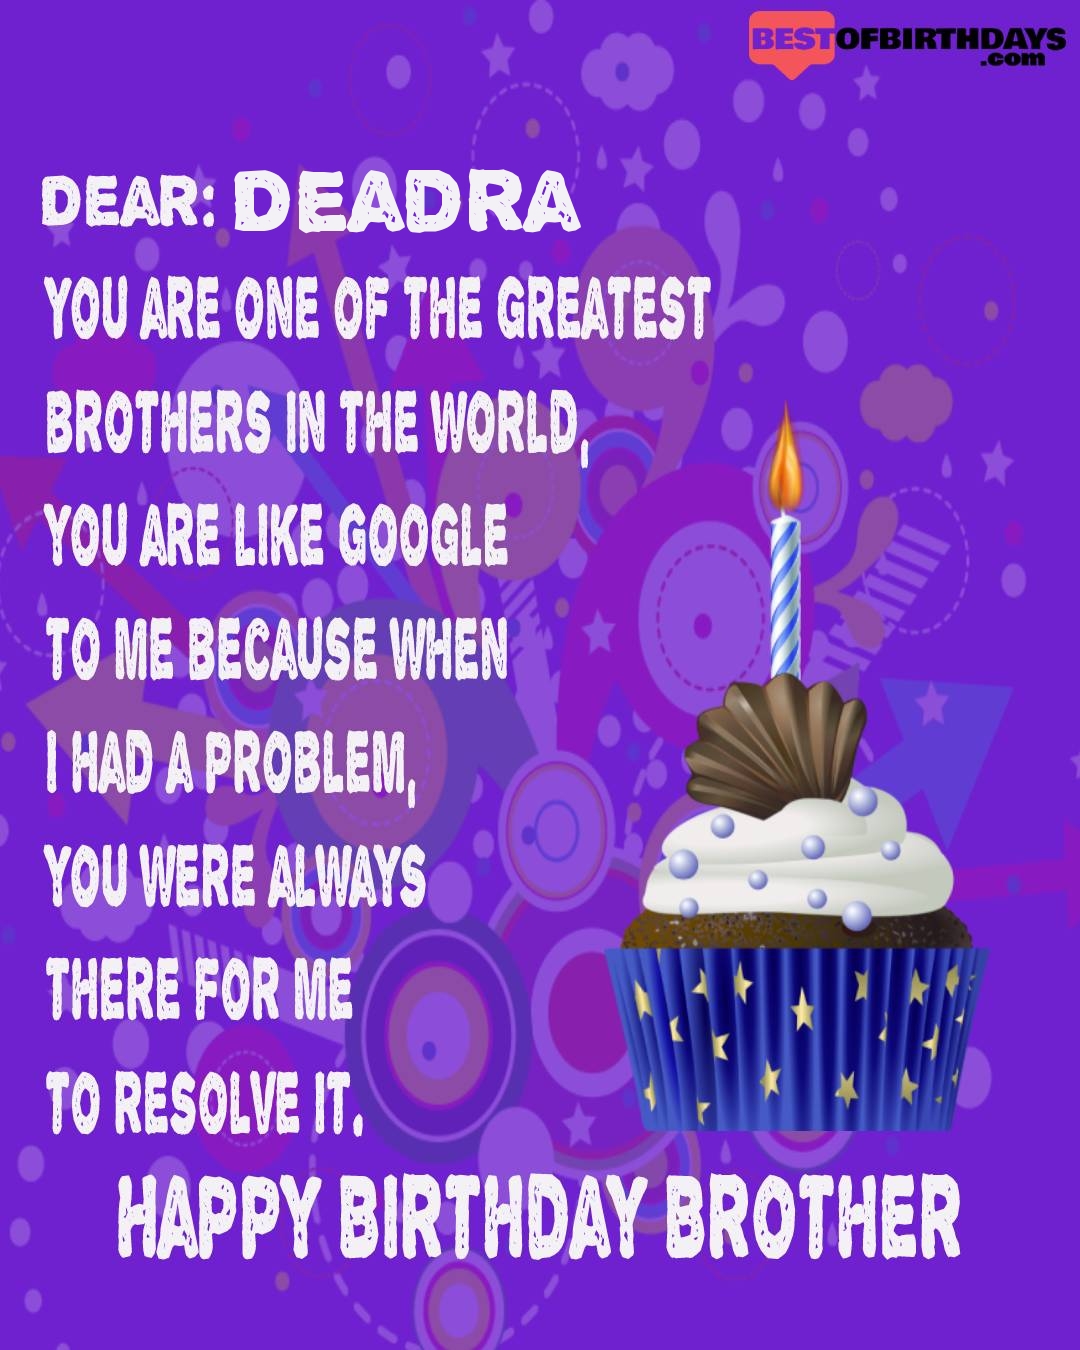 Happy birthday deadra bhai brother bro